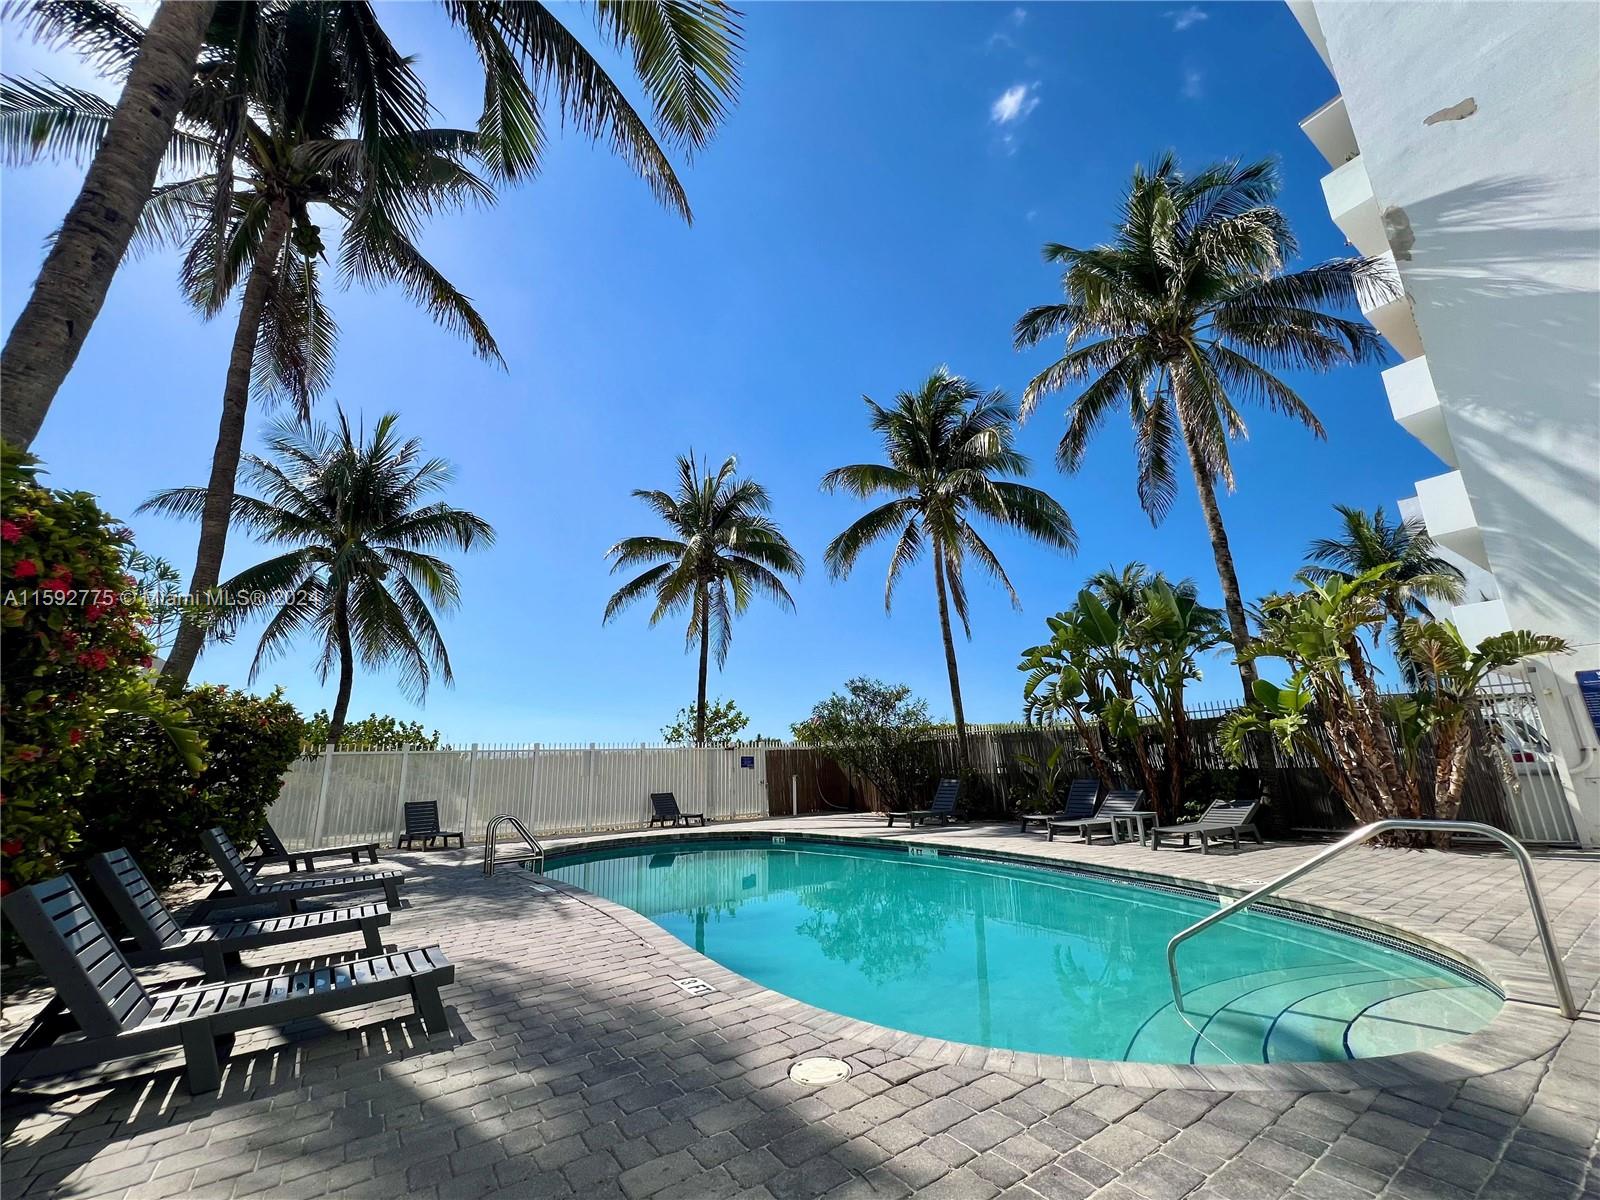 Property for Sale at 335 Ocean Dr 210, Miami Beach, Miami-Dade County, Florida - Bedrooms: 1 
Bathrooms: 1  - $500,000